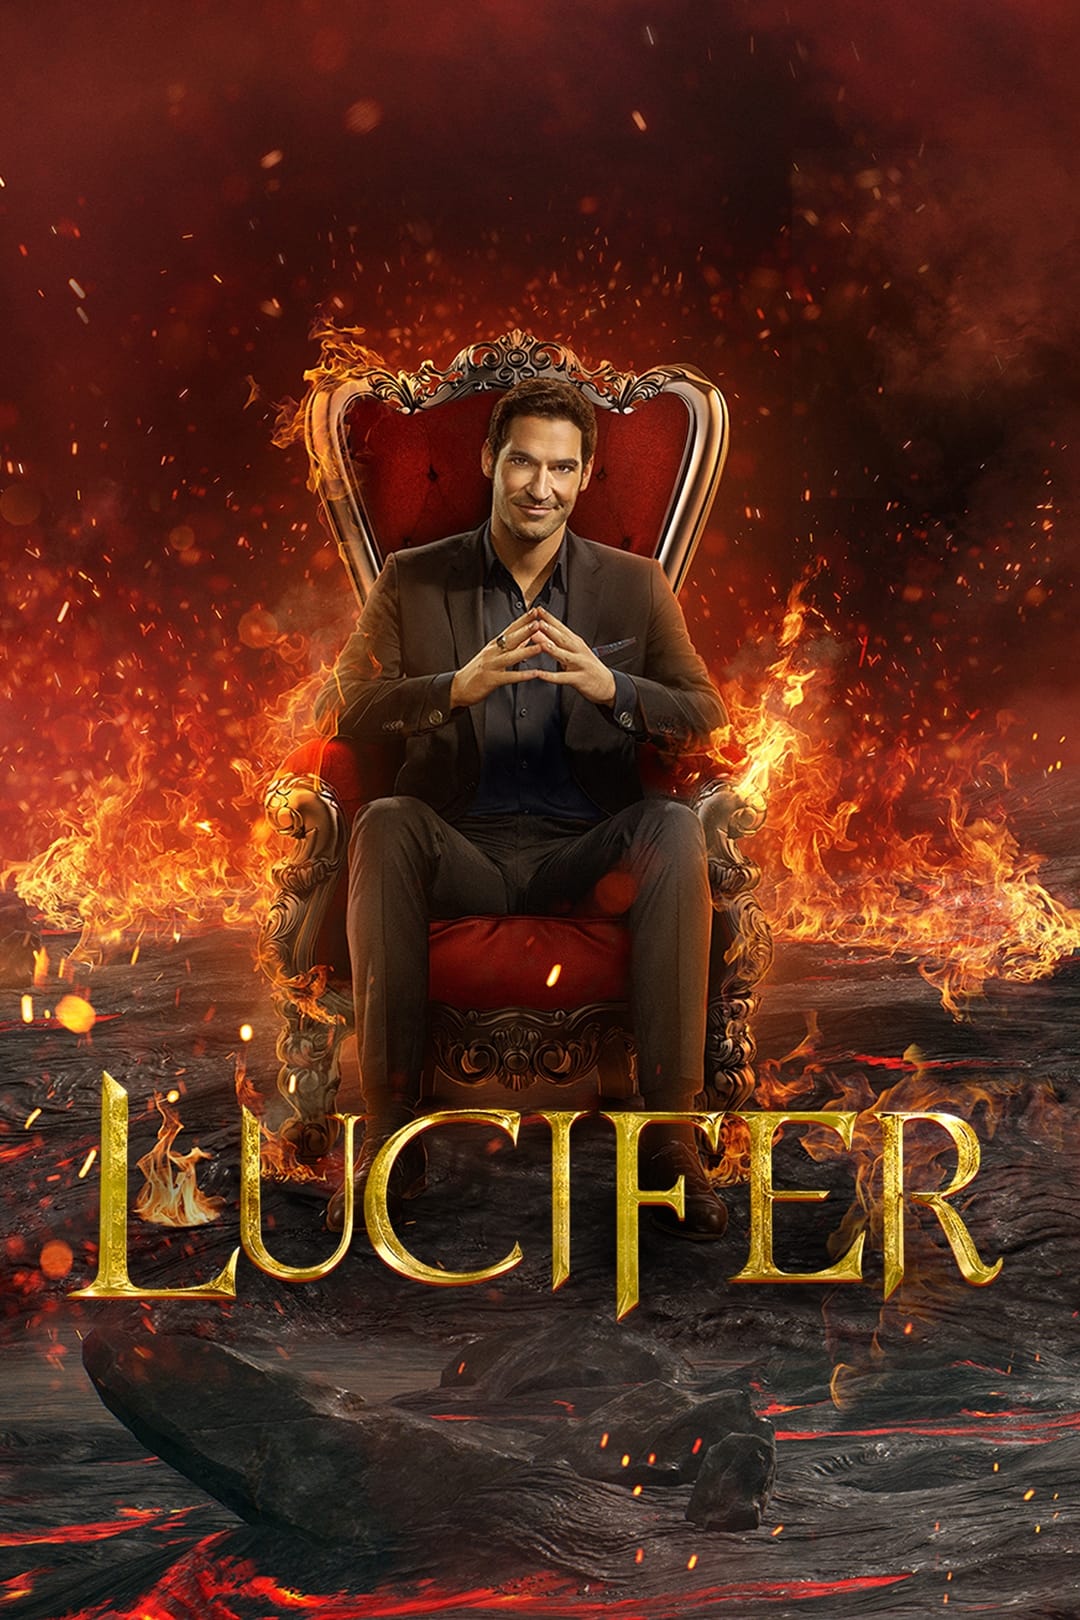 Plakát pro film “Lucifer”